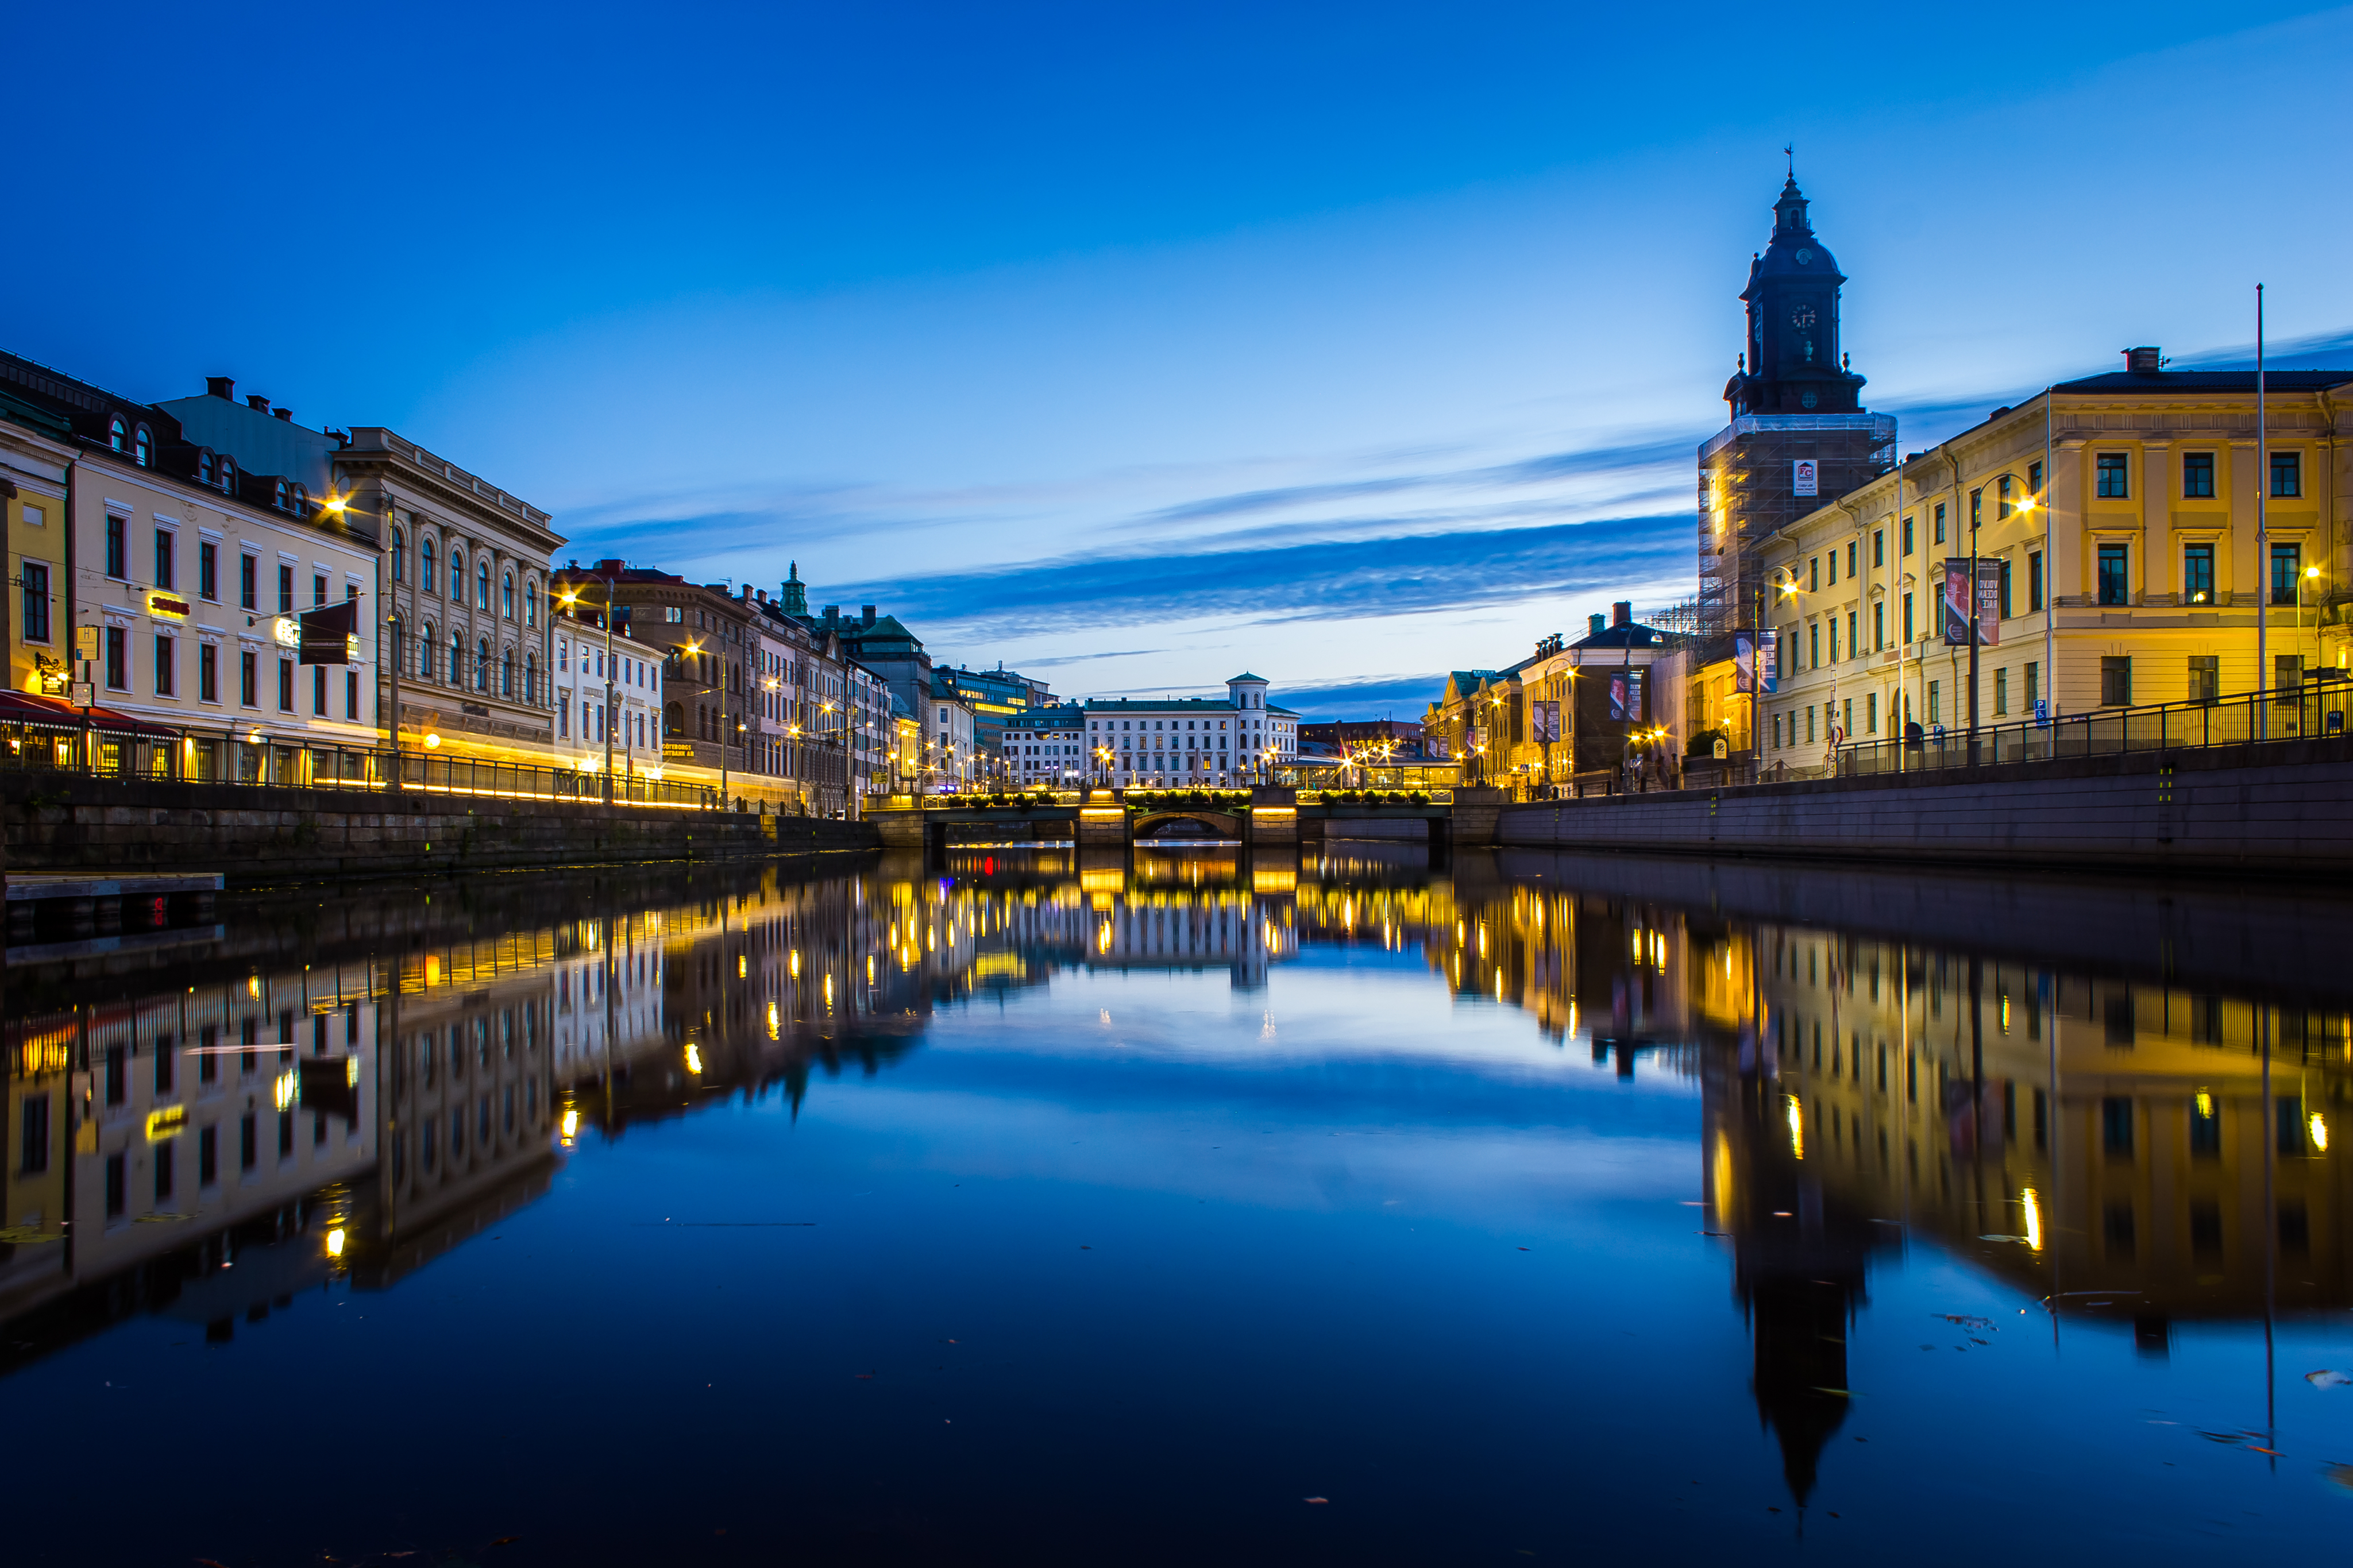 A view of Gothenburg city center